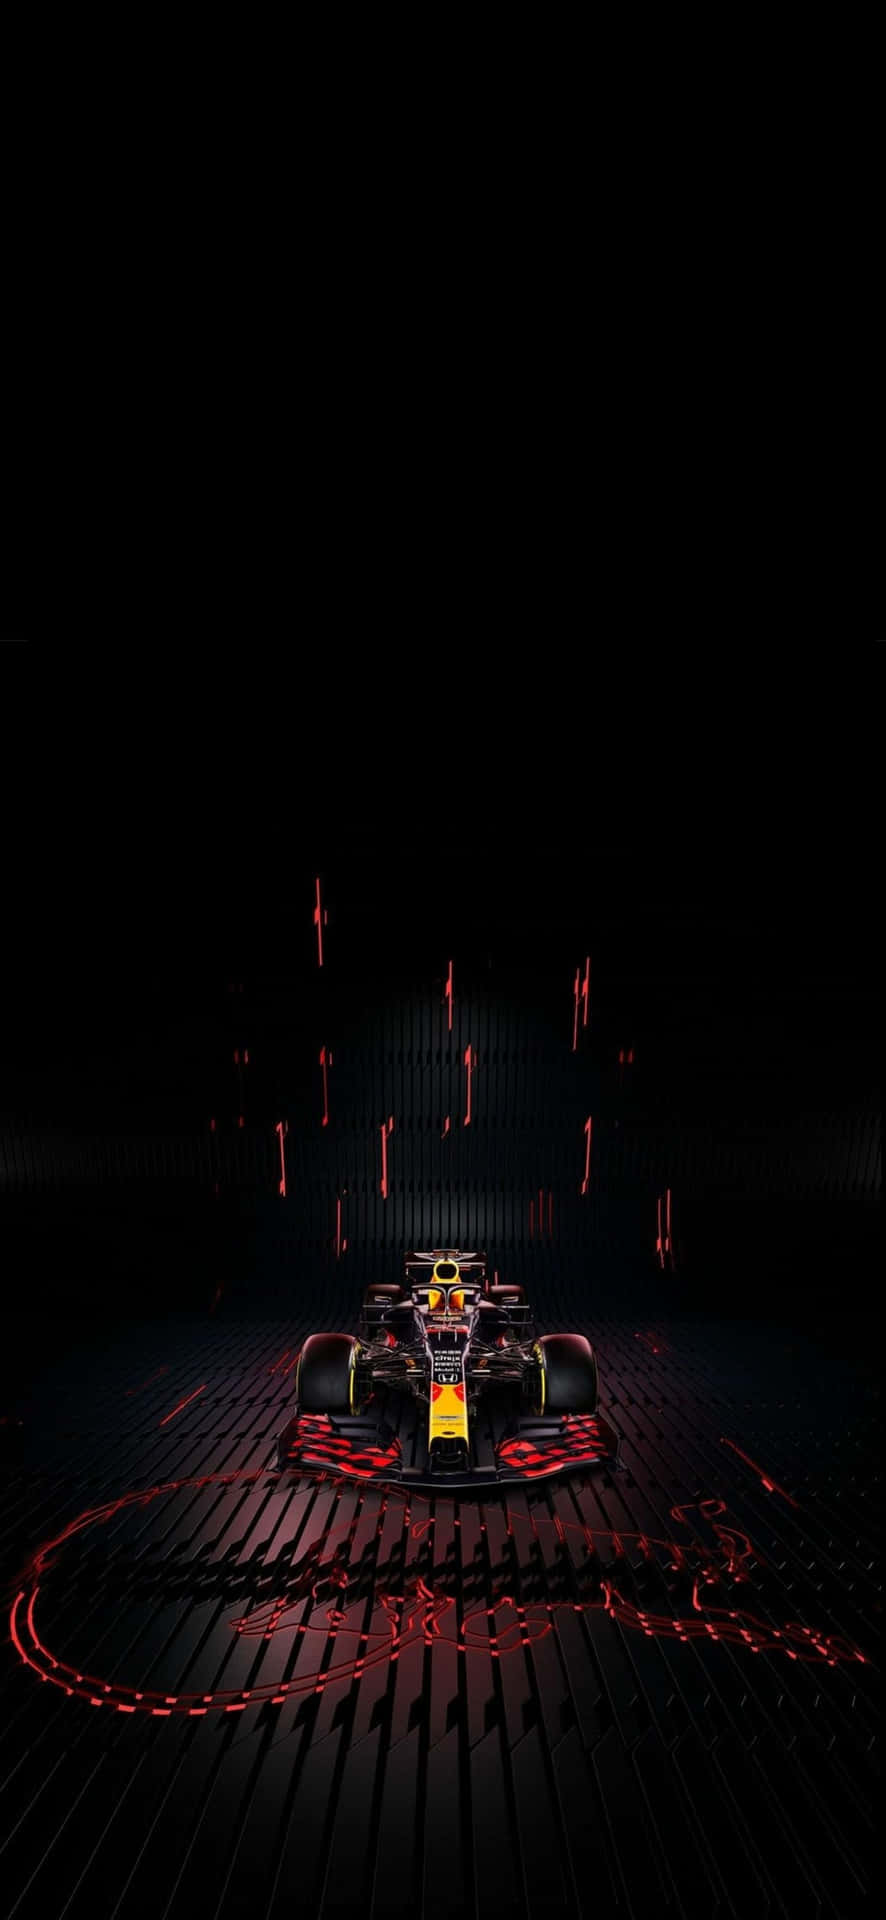 Max Verstappen speeding in his Formula 1 racing car